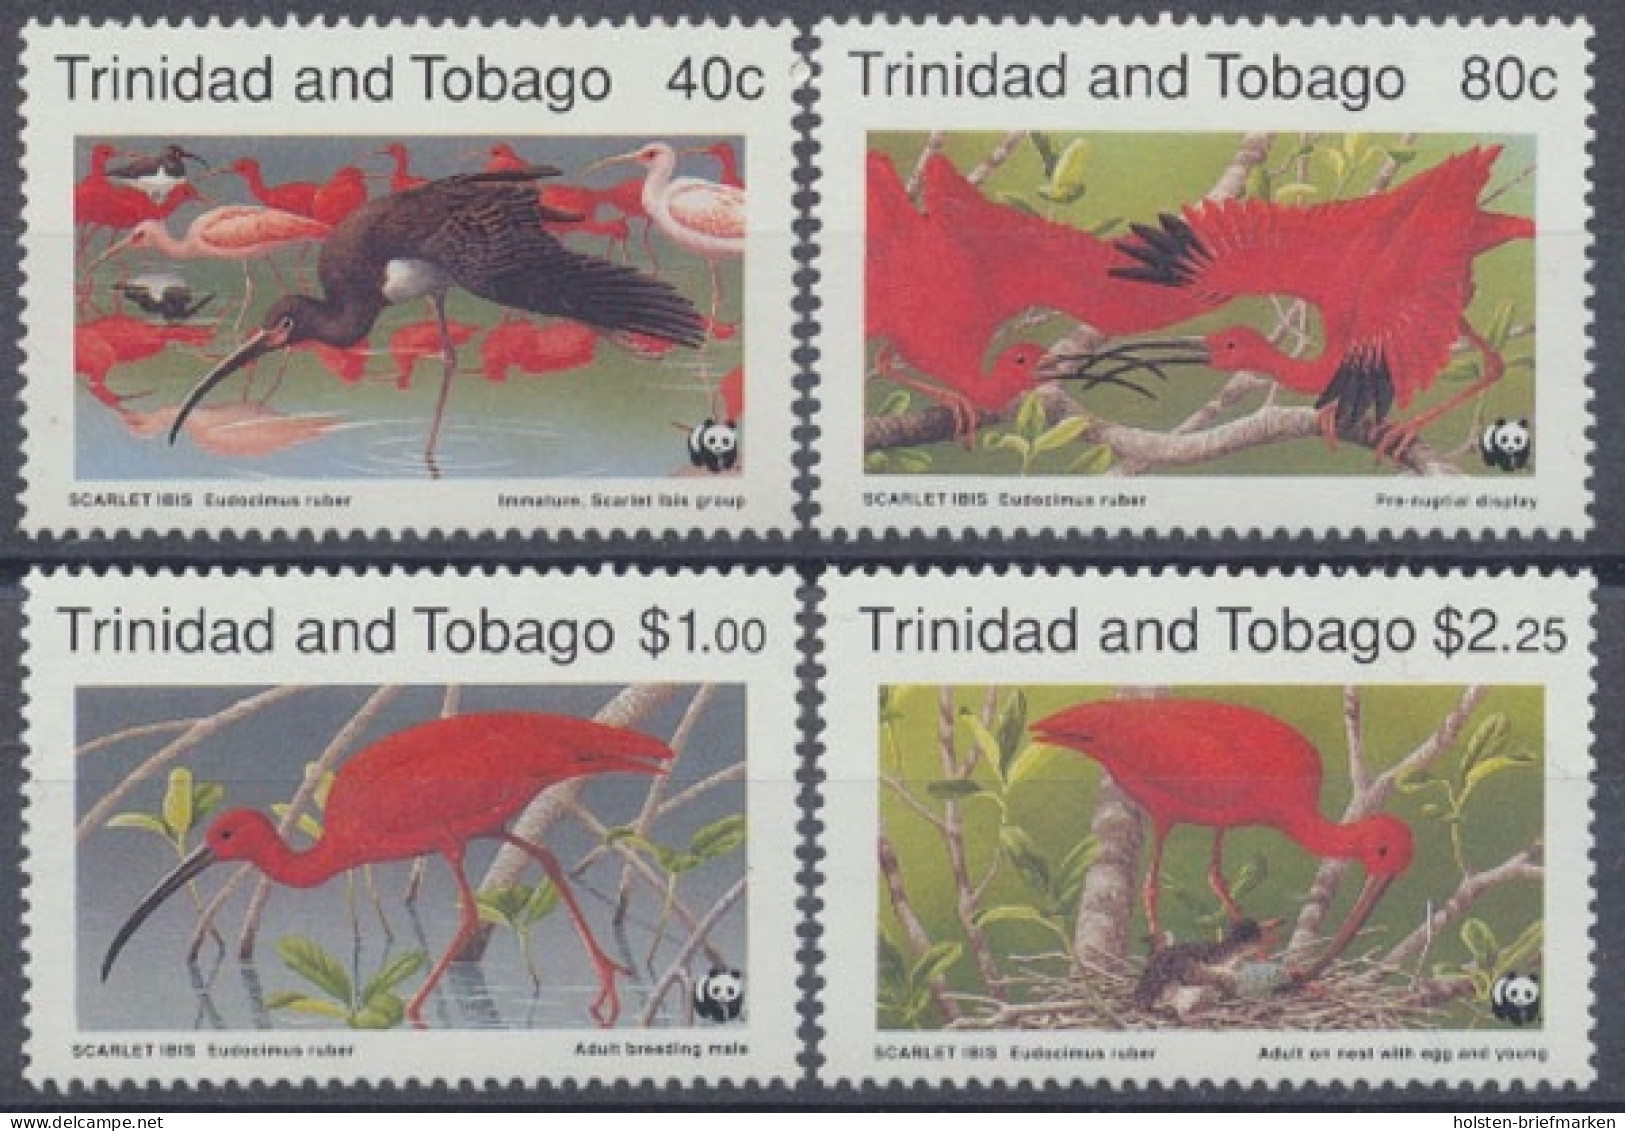 Trinidad Und Tobago, MiNr. 596-599, Postfrisch - Trinité & Tobago (1962-...)